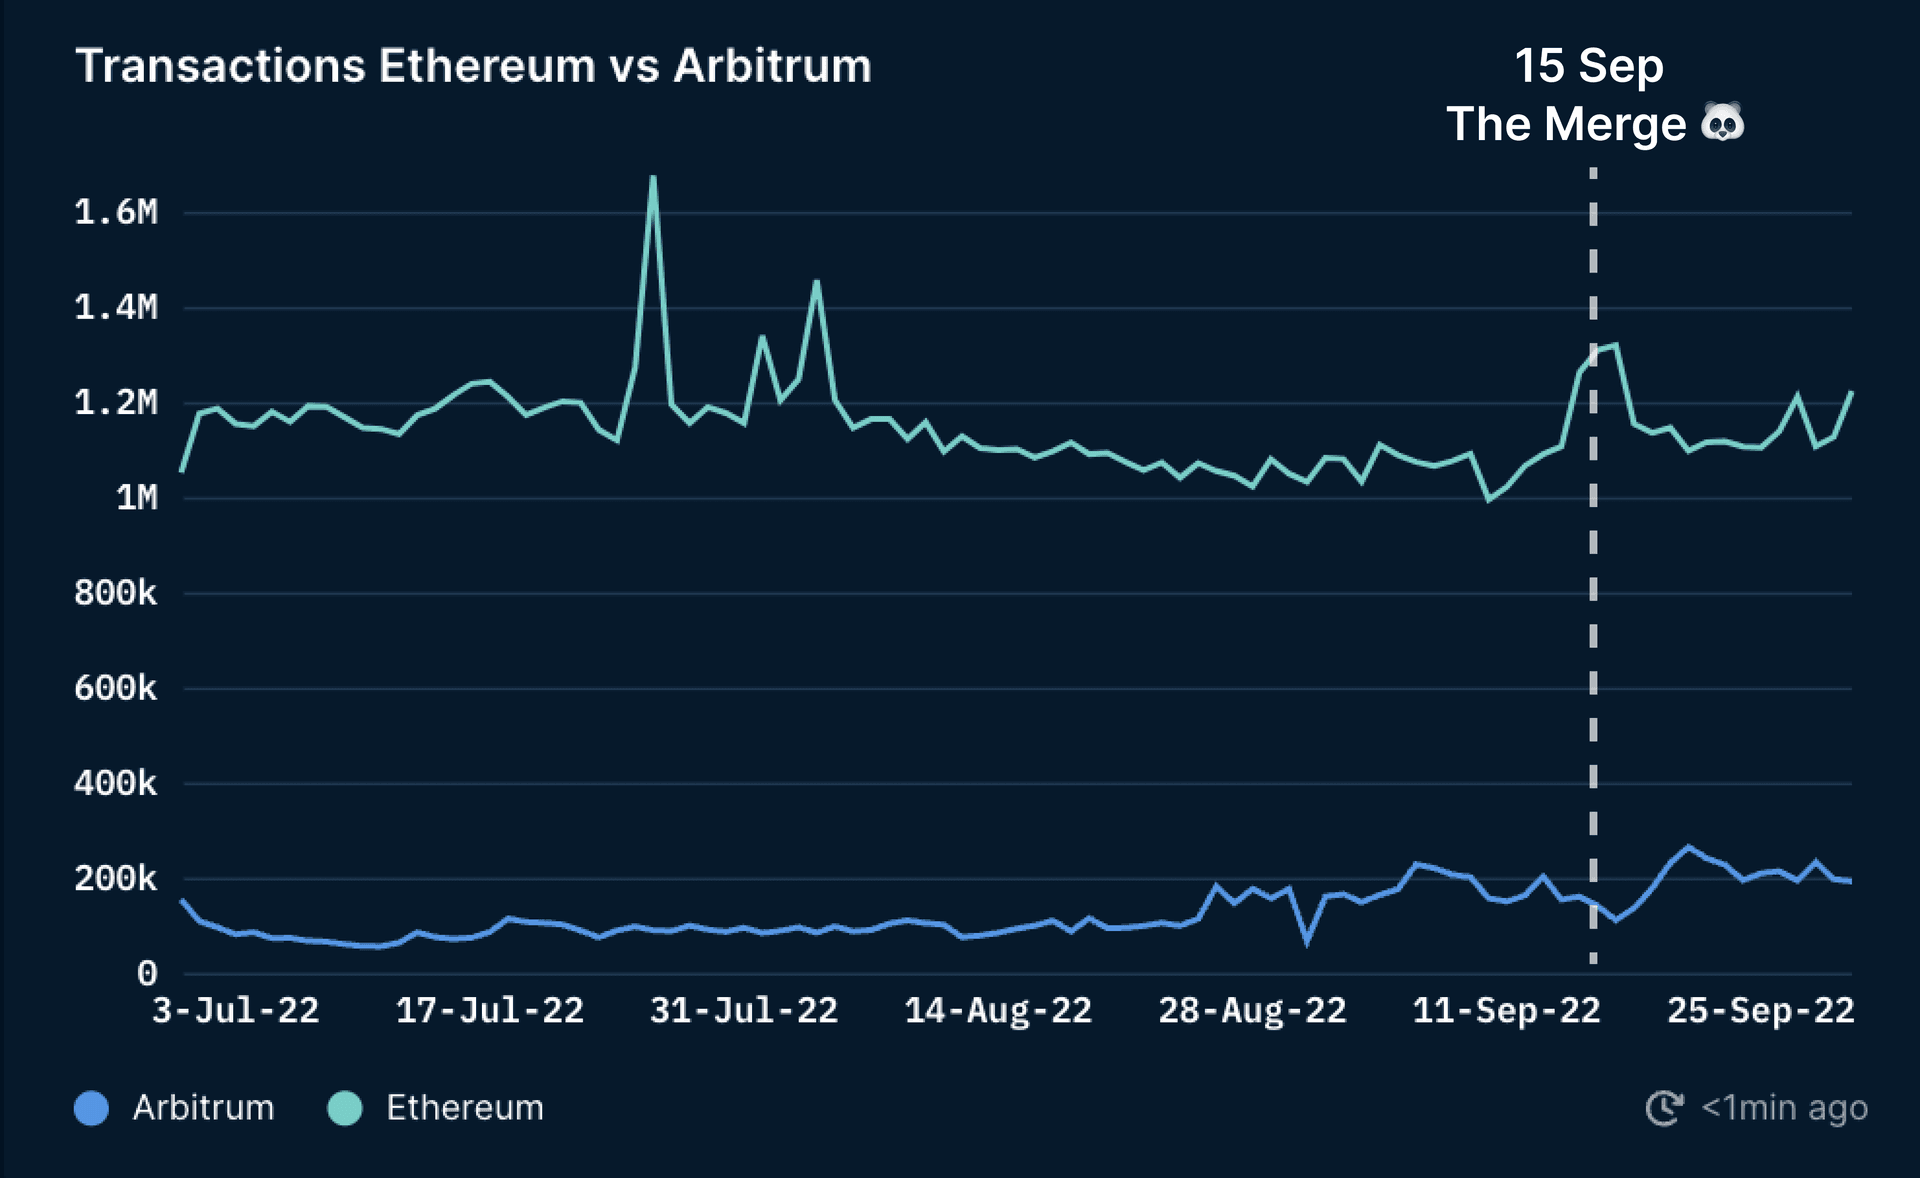 Daily Transaction on Ethereum vs Arbitrum